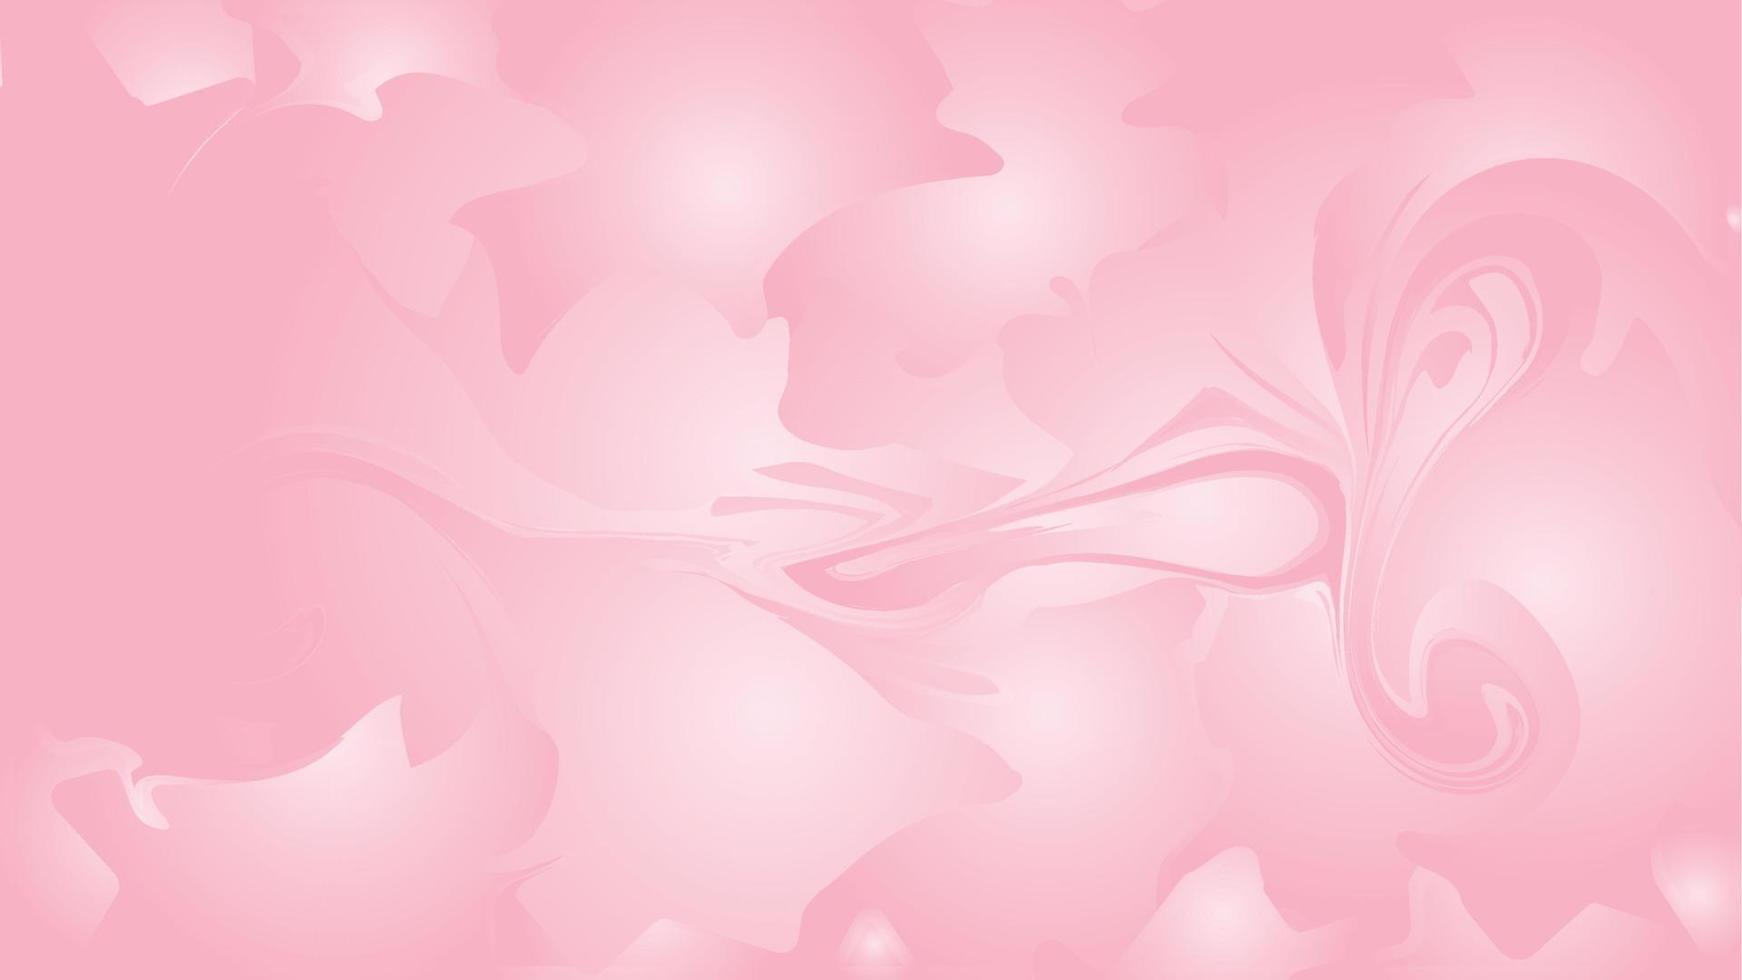 https://static.vecteezy.com/ti/vetor-gratis/p1/17645302-fundo-rosa-abstrato-com-fumaca-fundo-gradiente-de-textura-macia-rosa-vetor.jpg